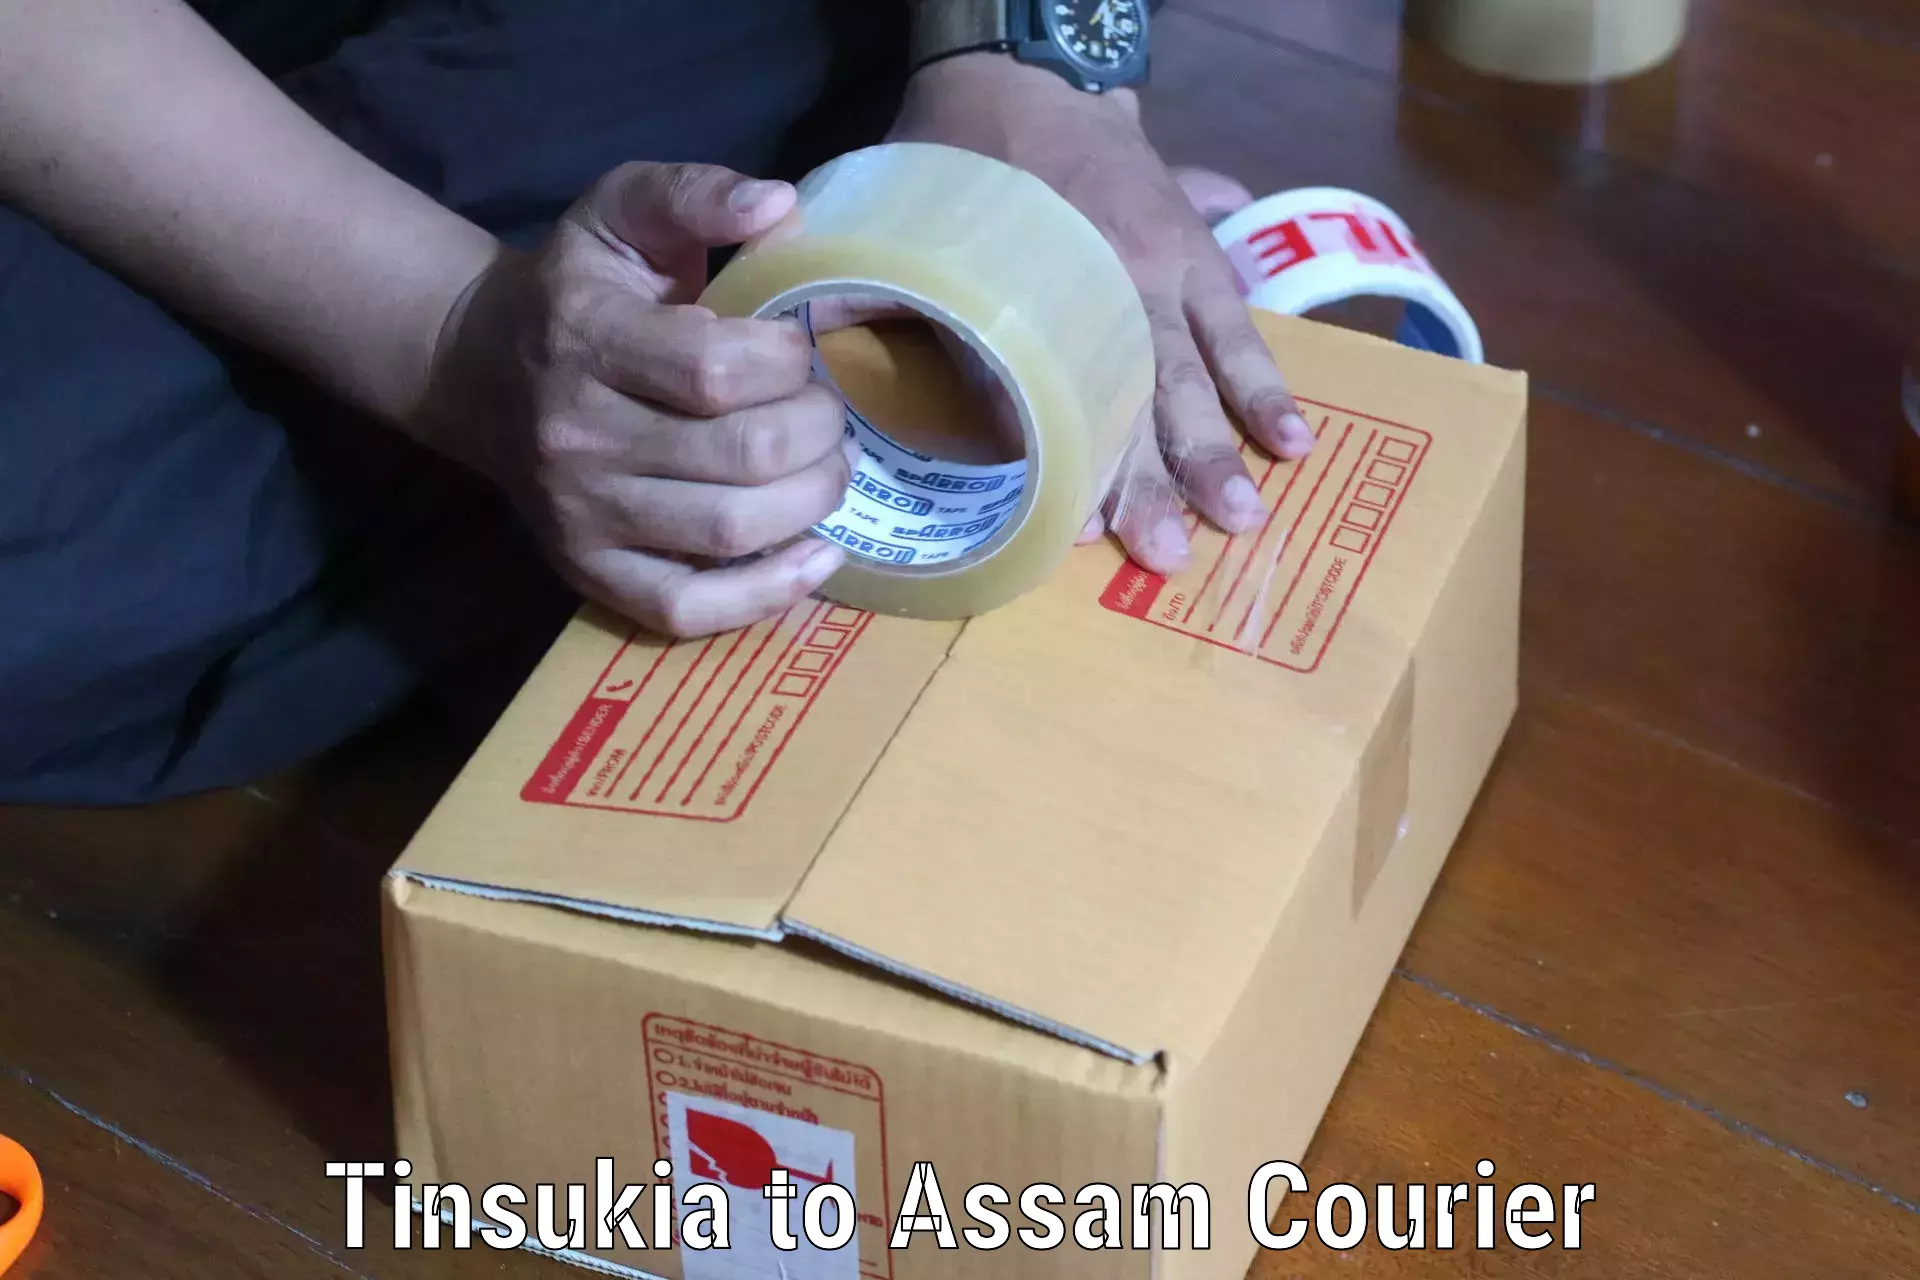 Courier service innovation Tinsukia to Hailakandi